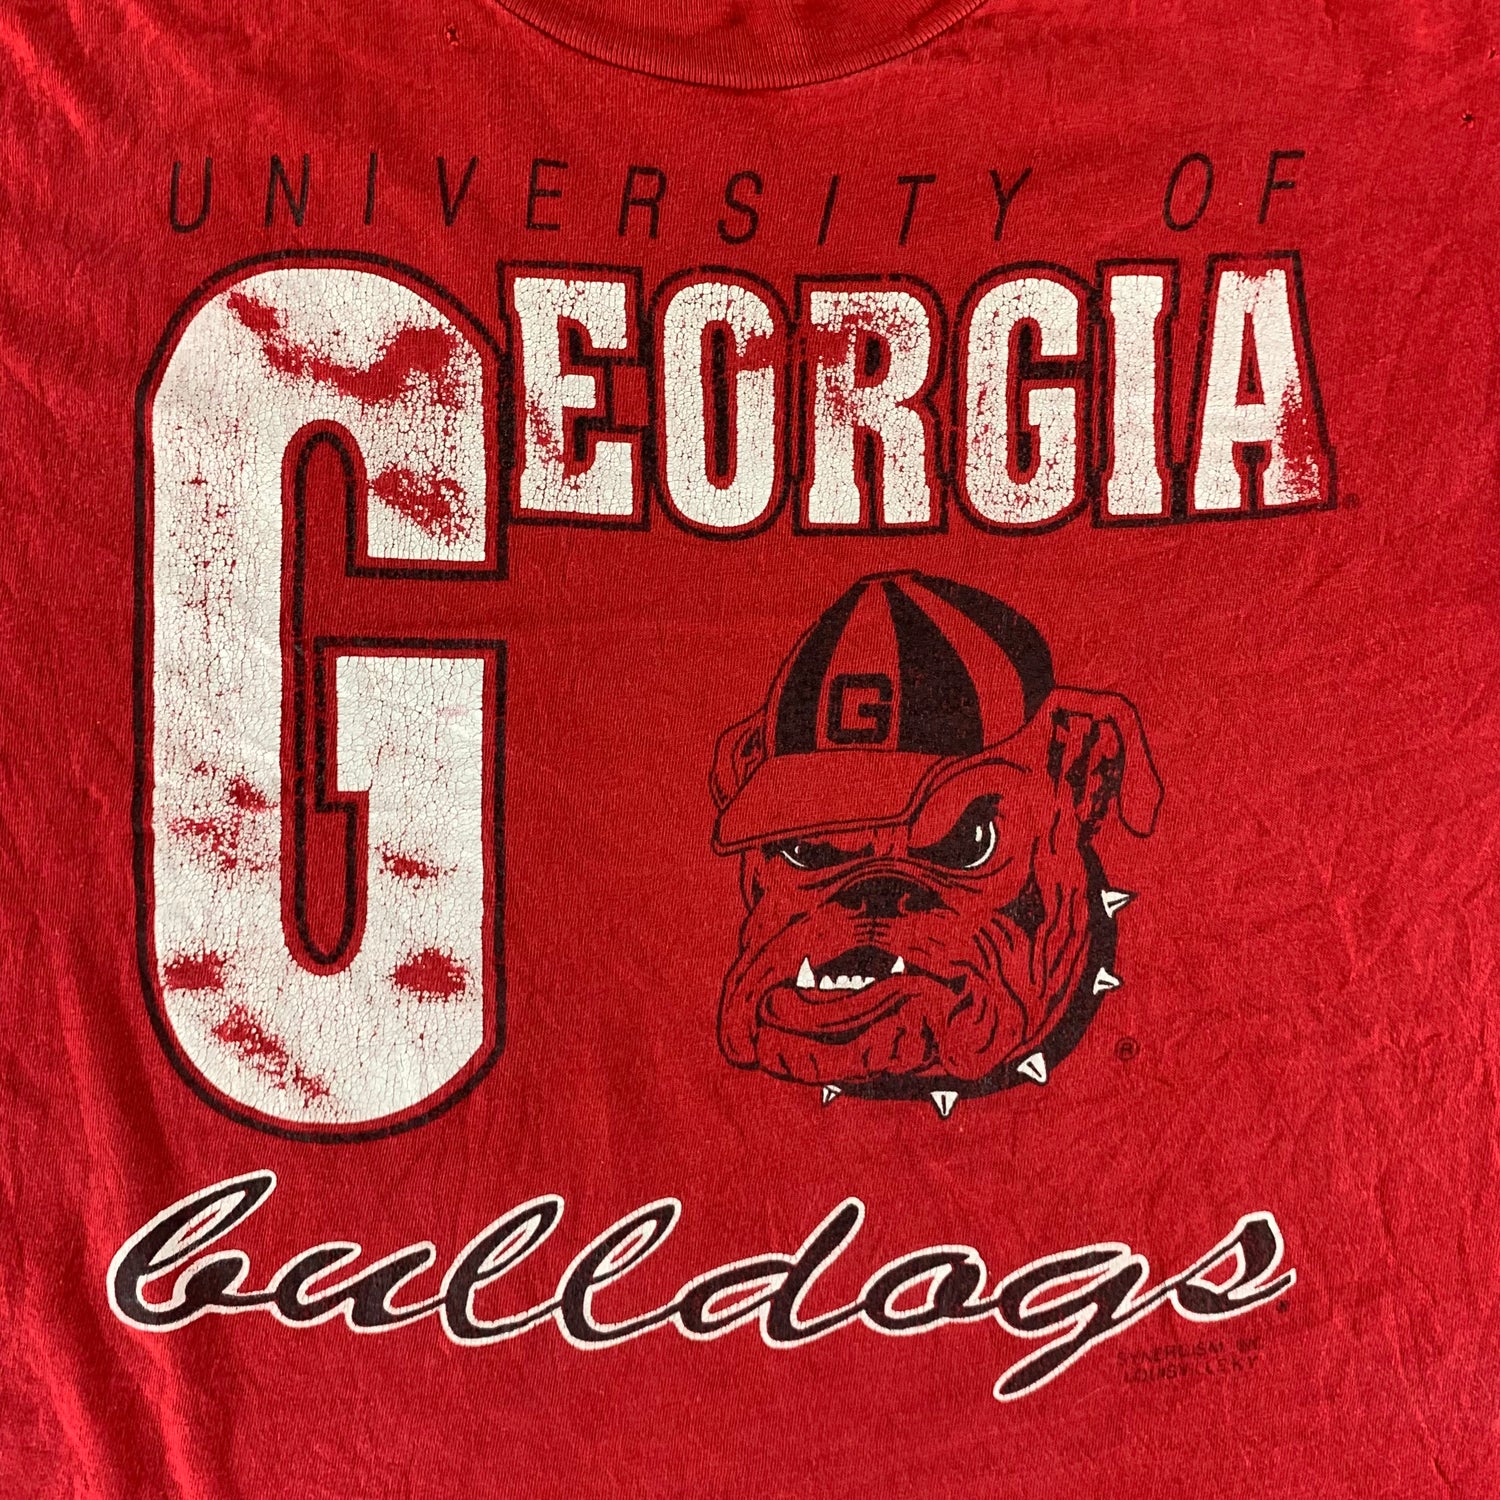 Vintage 1990s University of Georgia T-shirt size Large